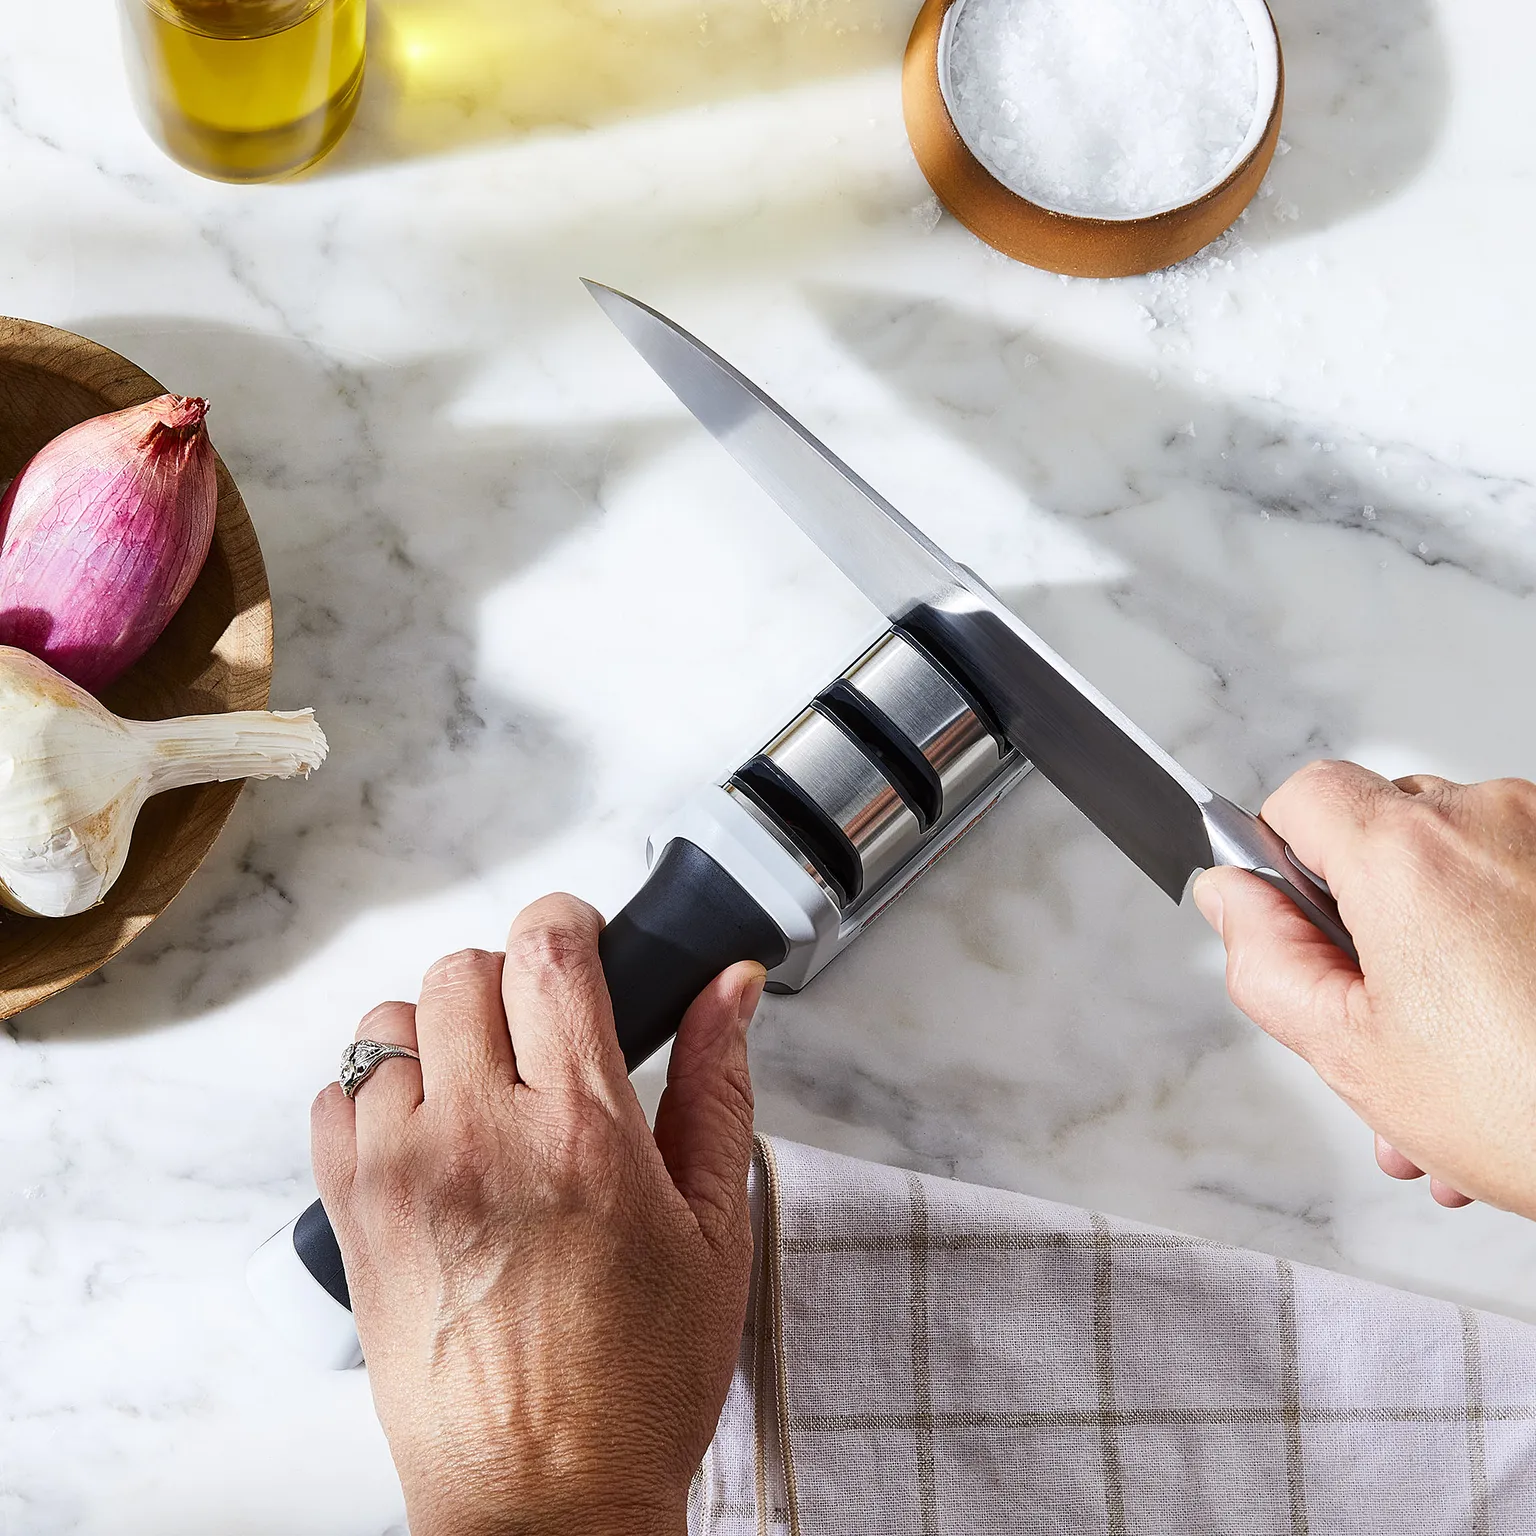 Chef's Choice ProntoPro 4643, knife sharpener  Advantageously shopping at